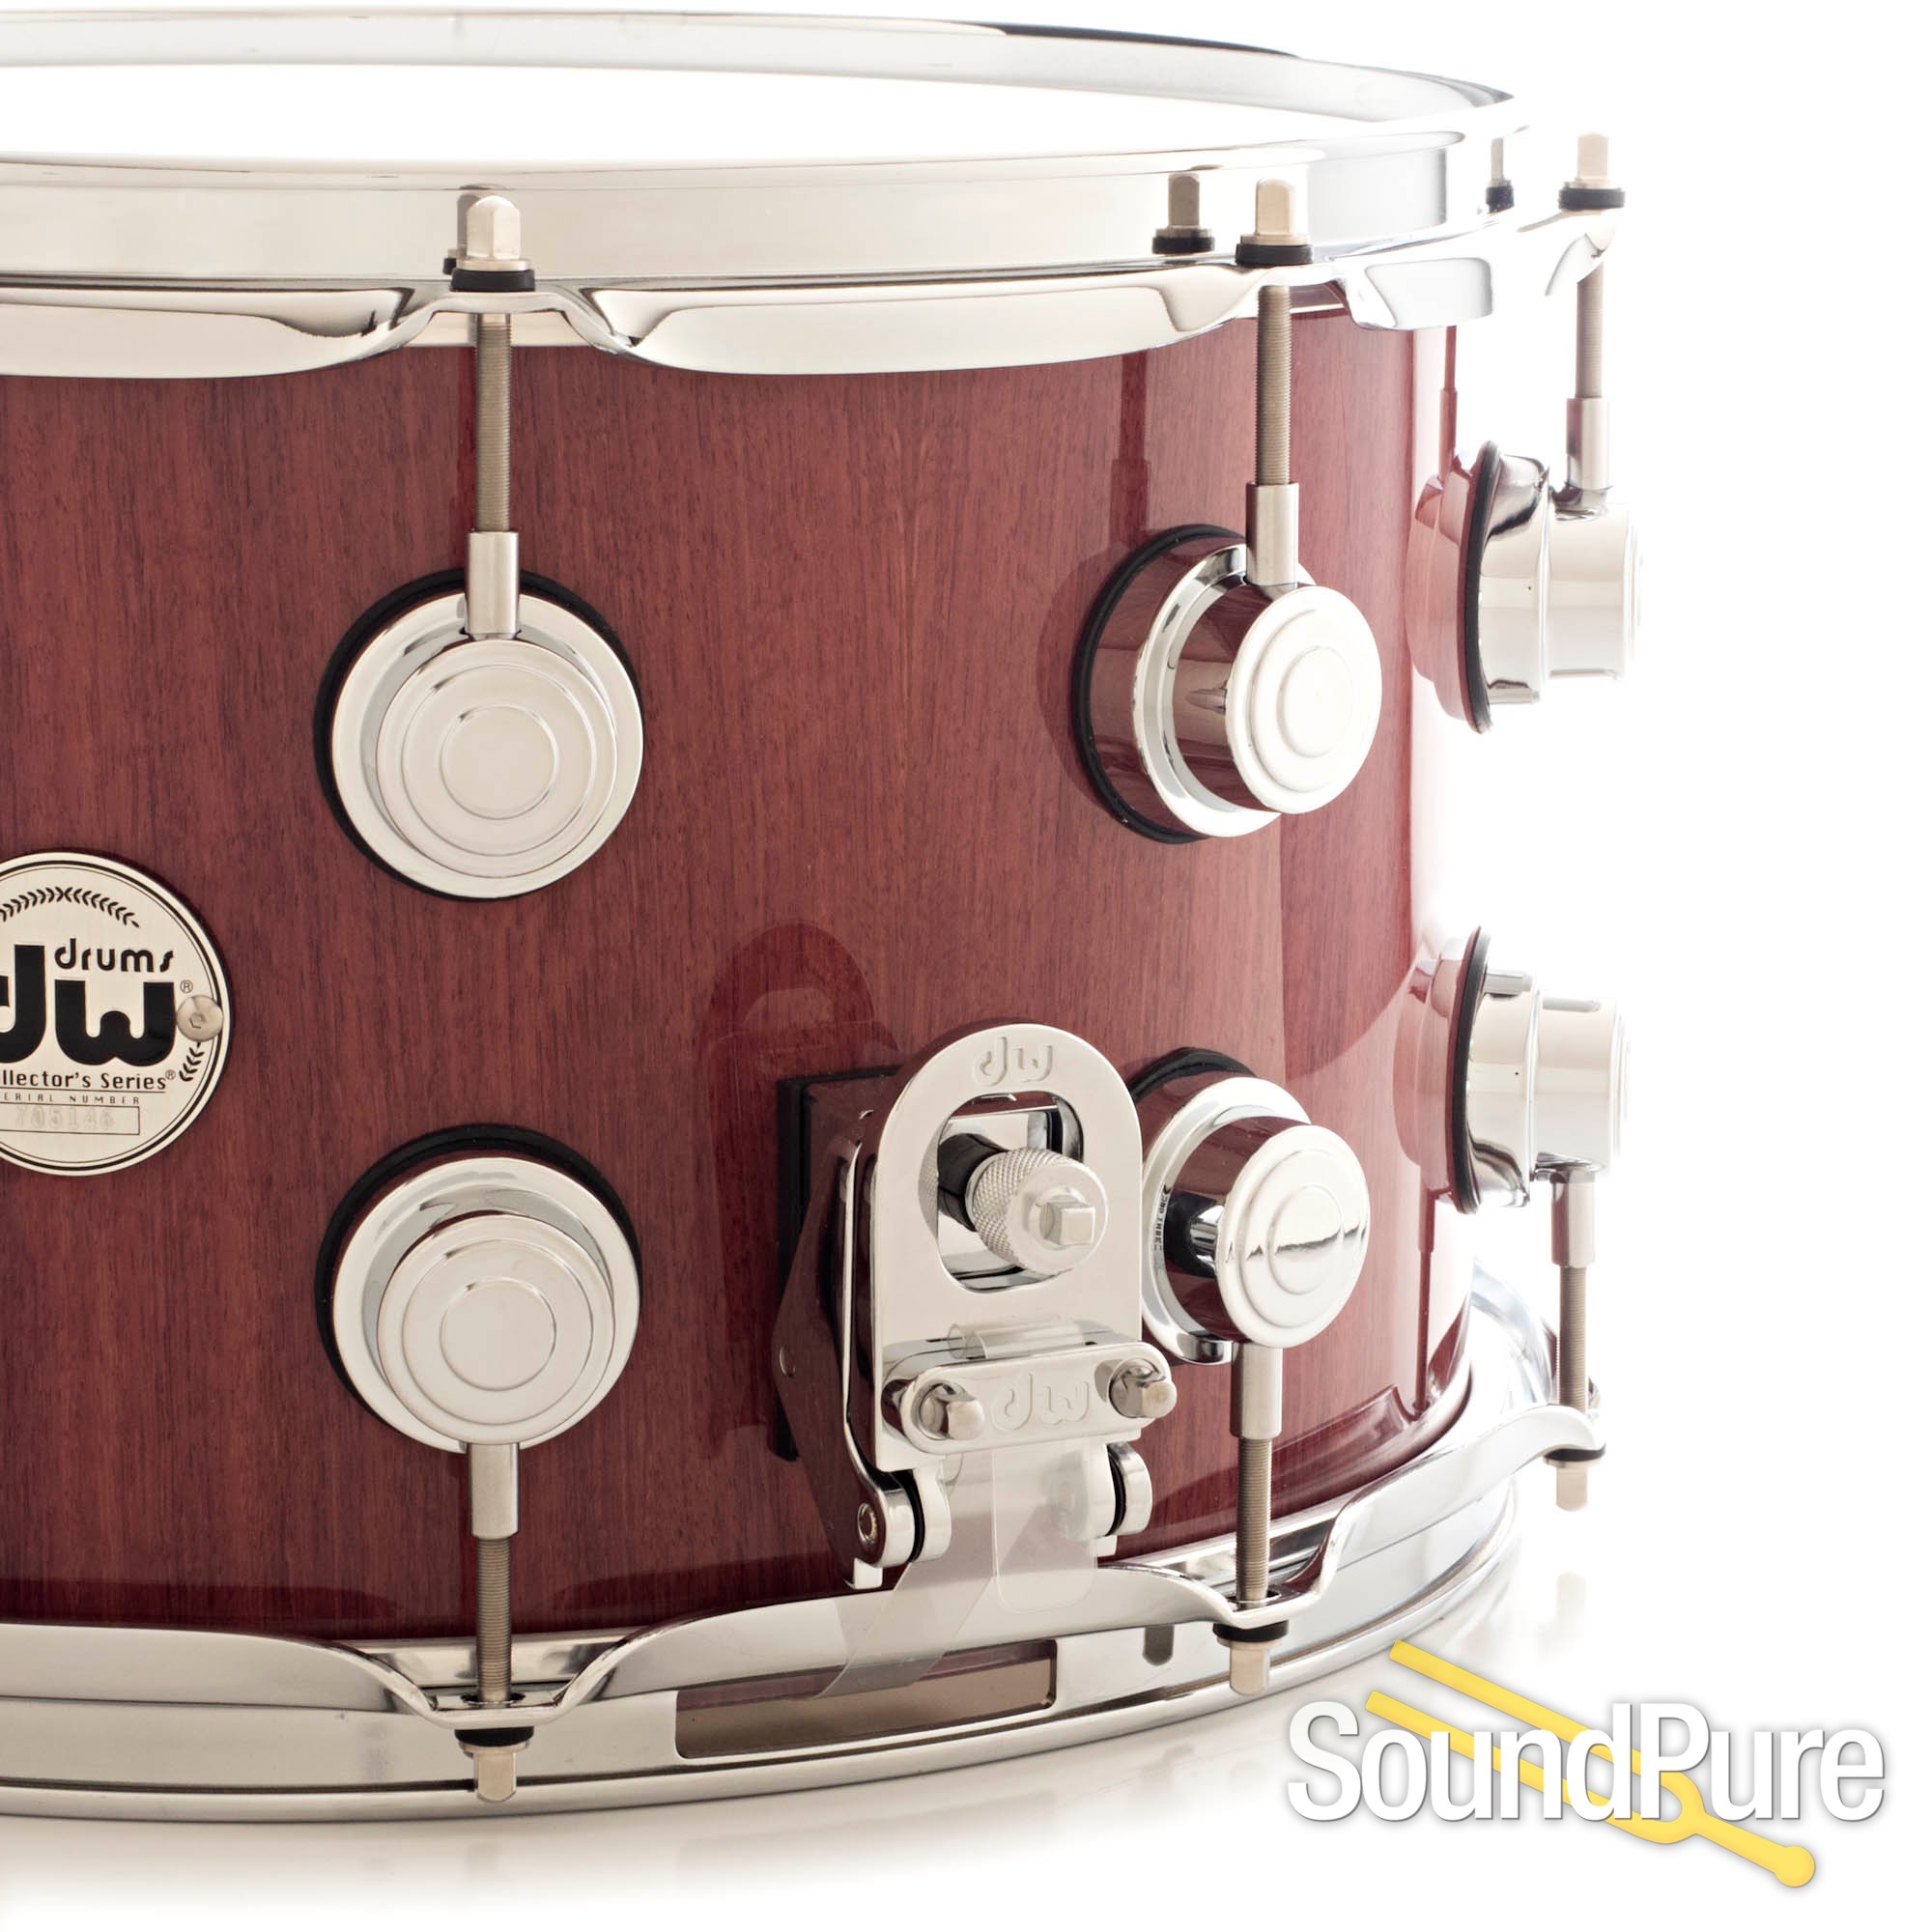 DW 8x Collectors Series Purpleheart Snare Drum   Soundpure.com